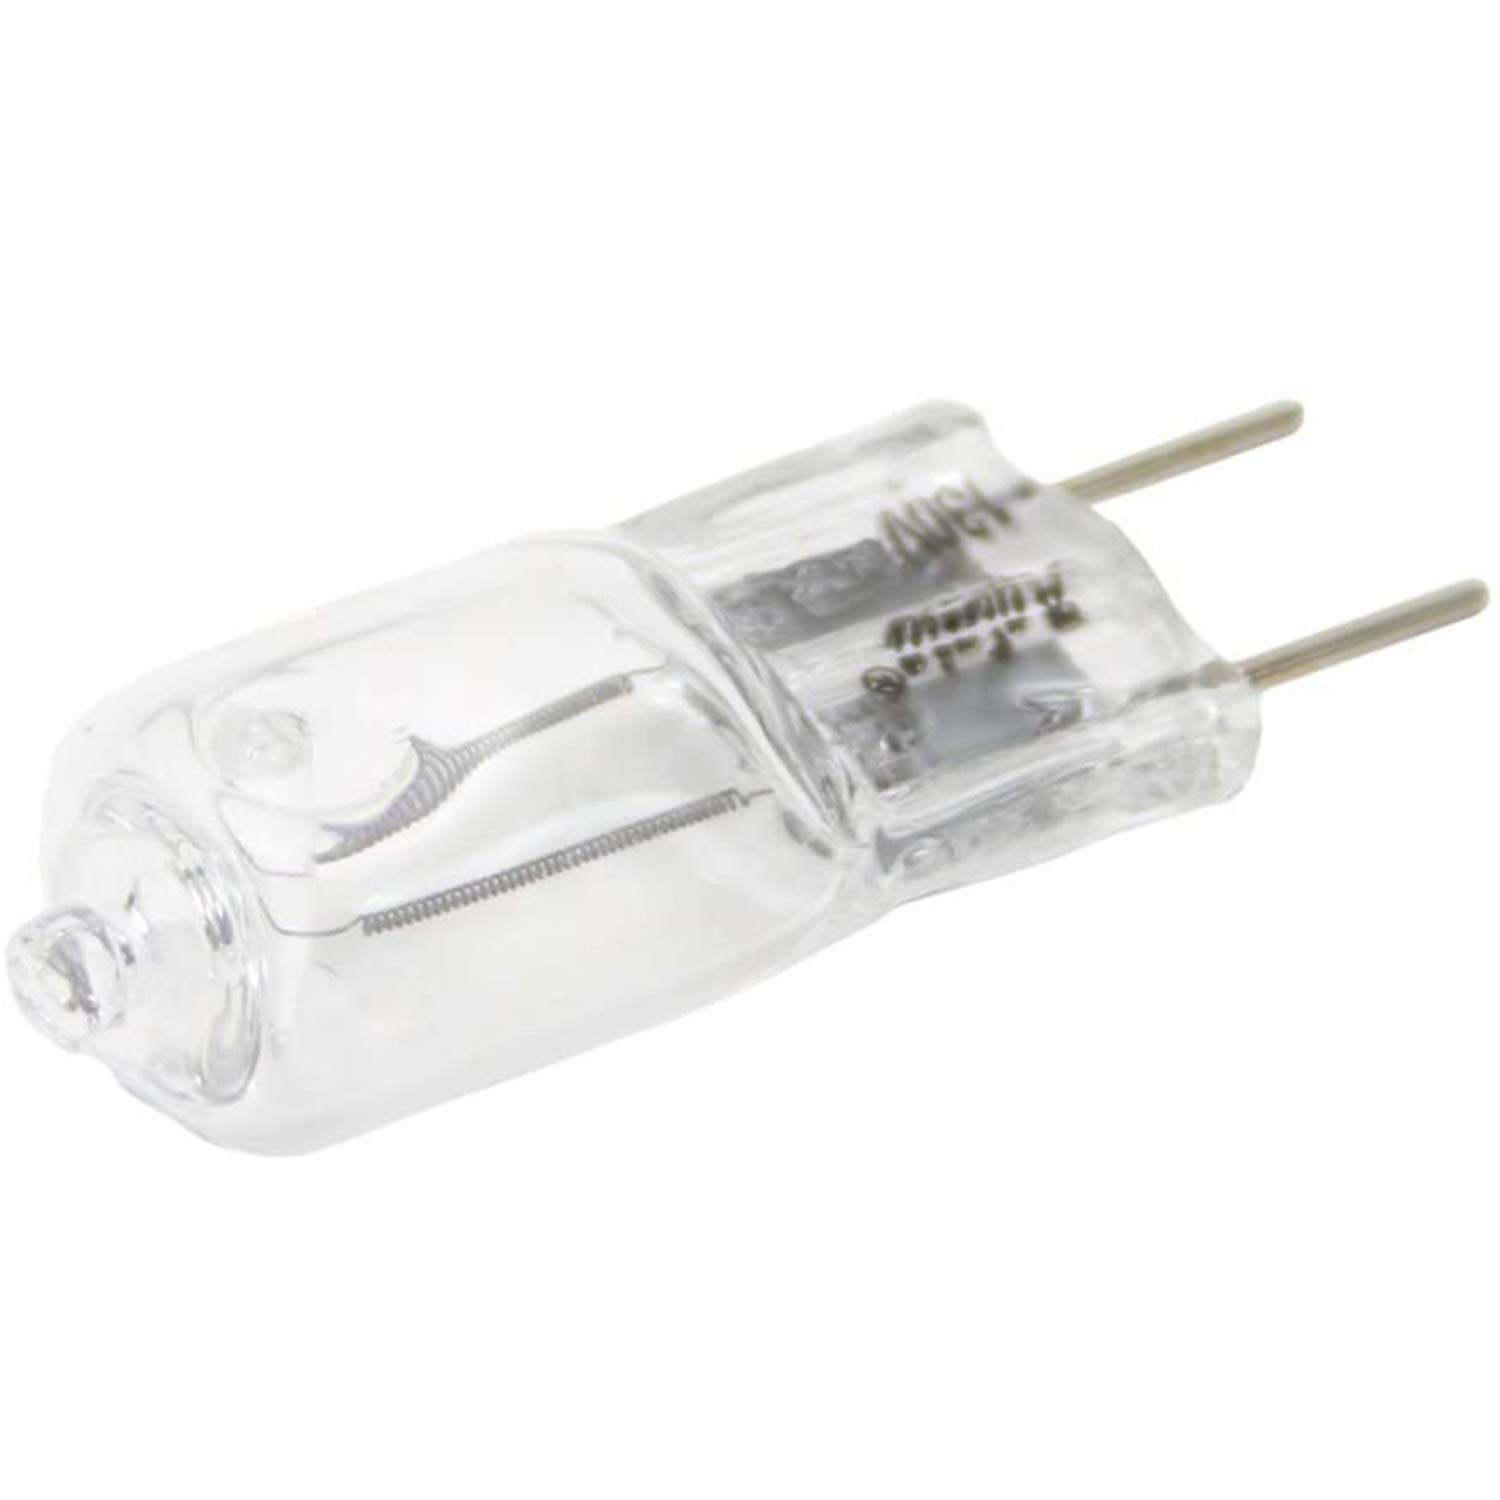 Whirlpool Microwave Halogen Light Bulb. Part #WP53001905